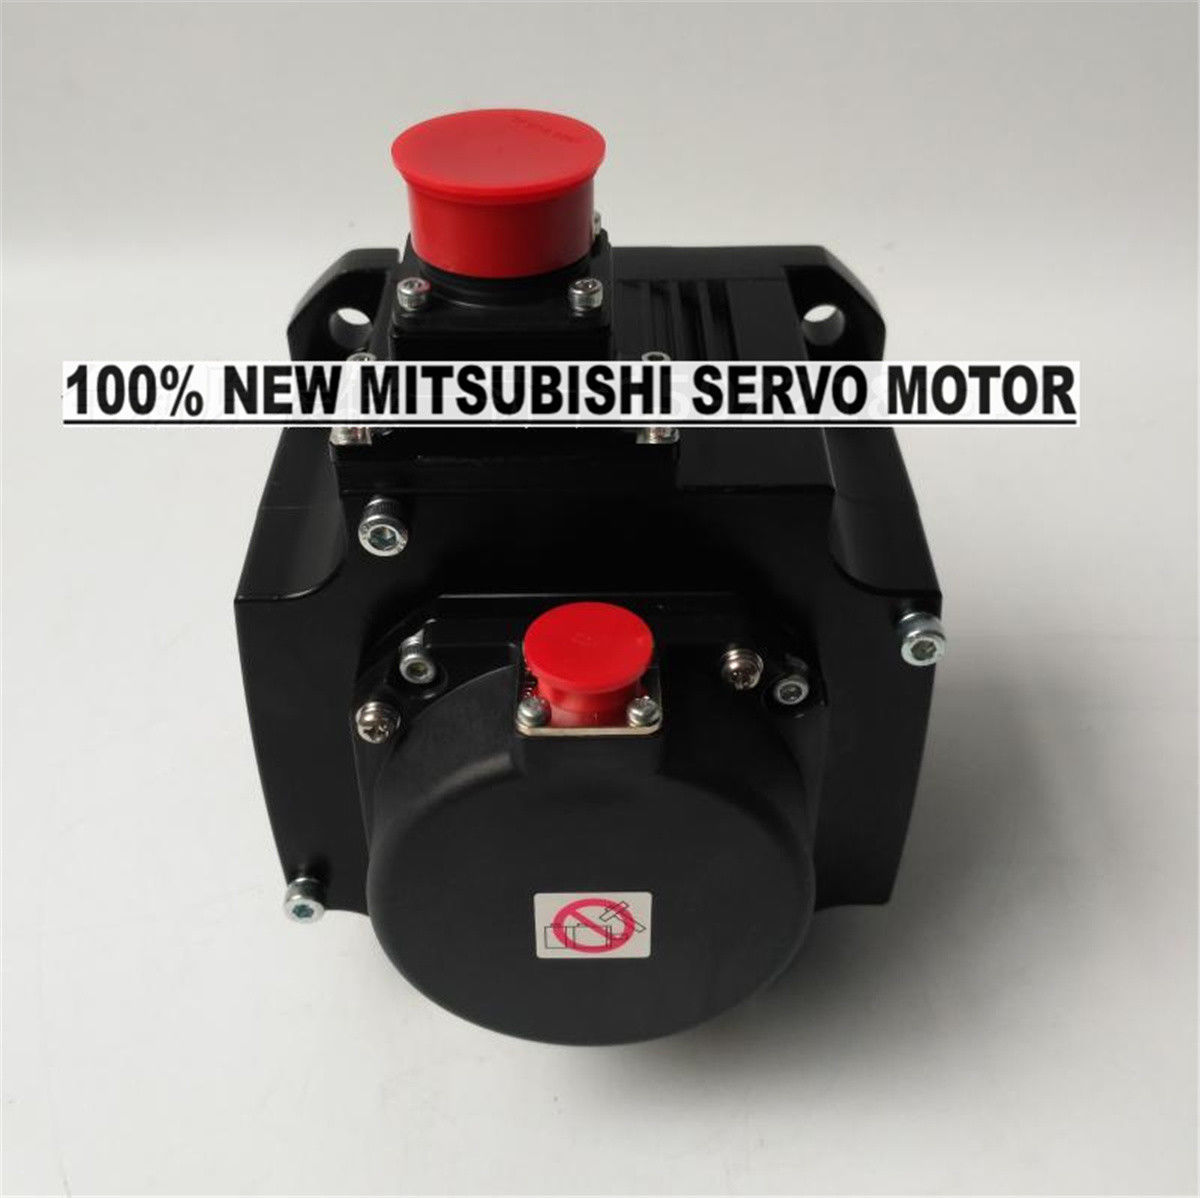 NEW Mitsubishi Servo Motor HG-SR51J in box HGSR51J - zum Schließen ins Bild klicken